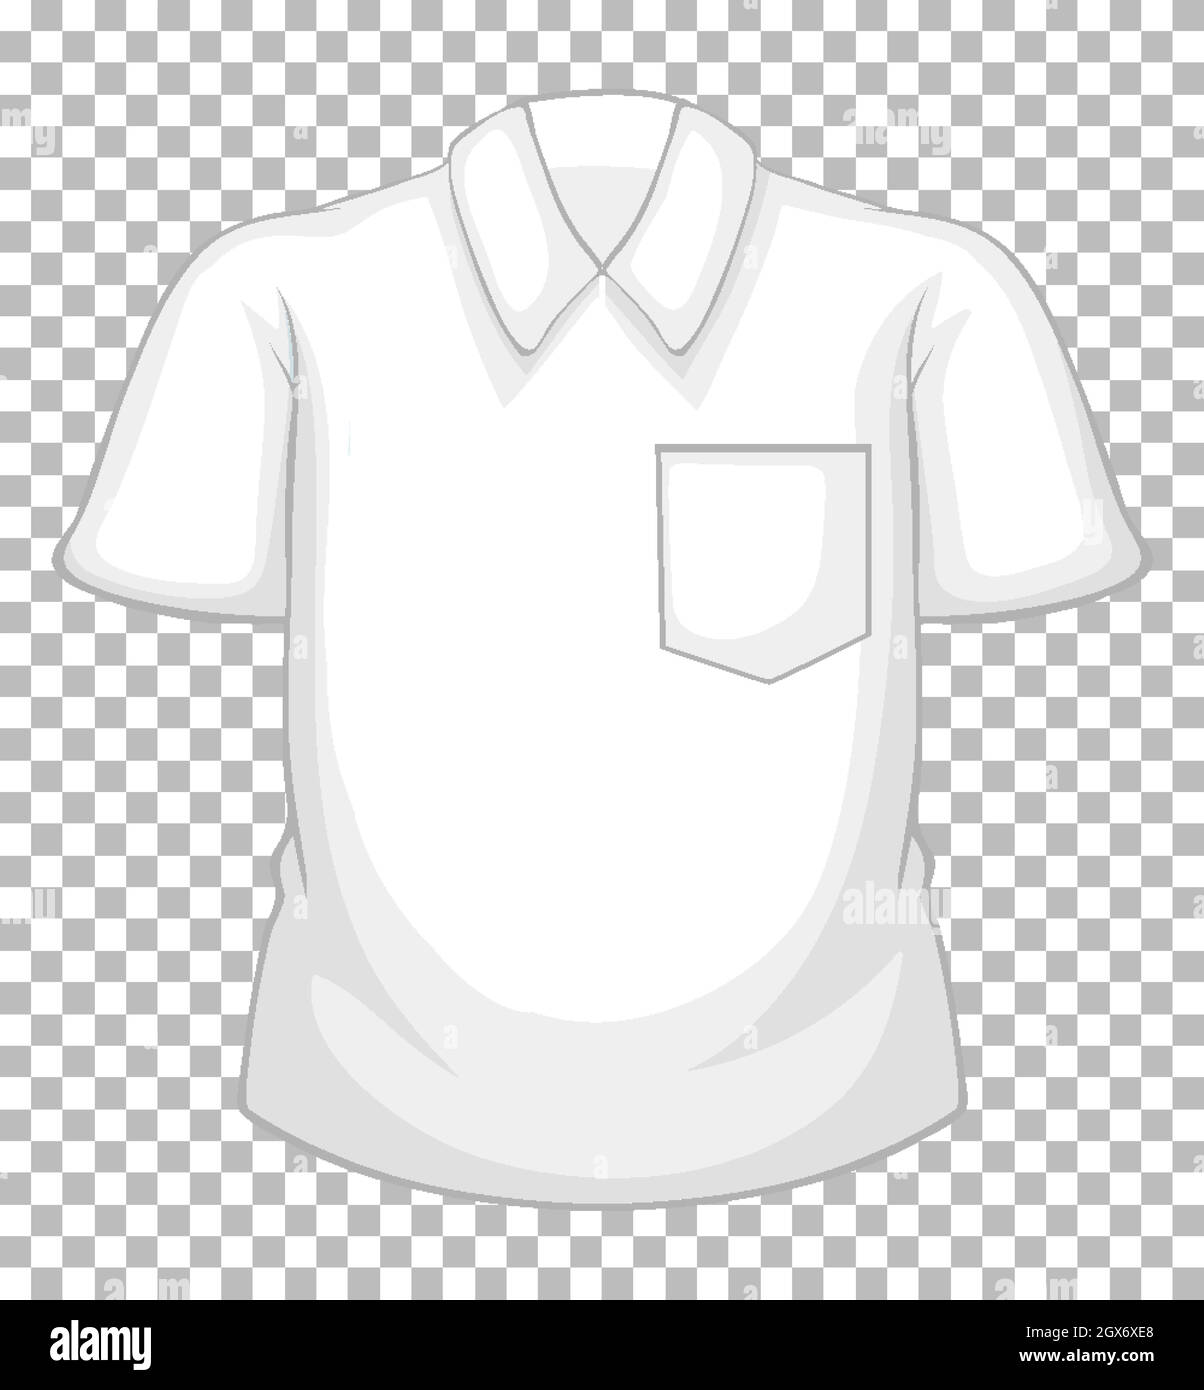 Shirt Pocket Line Art